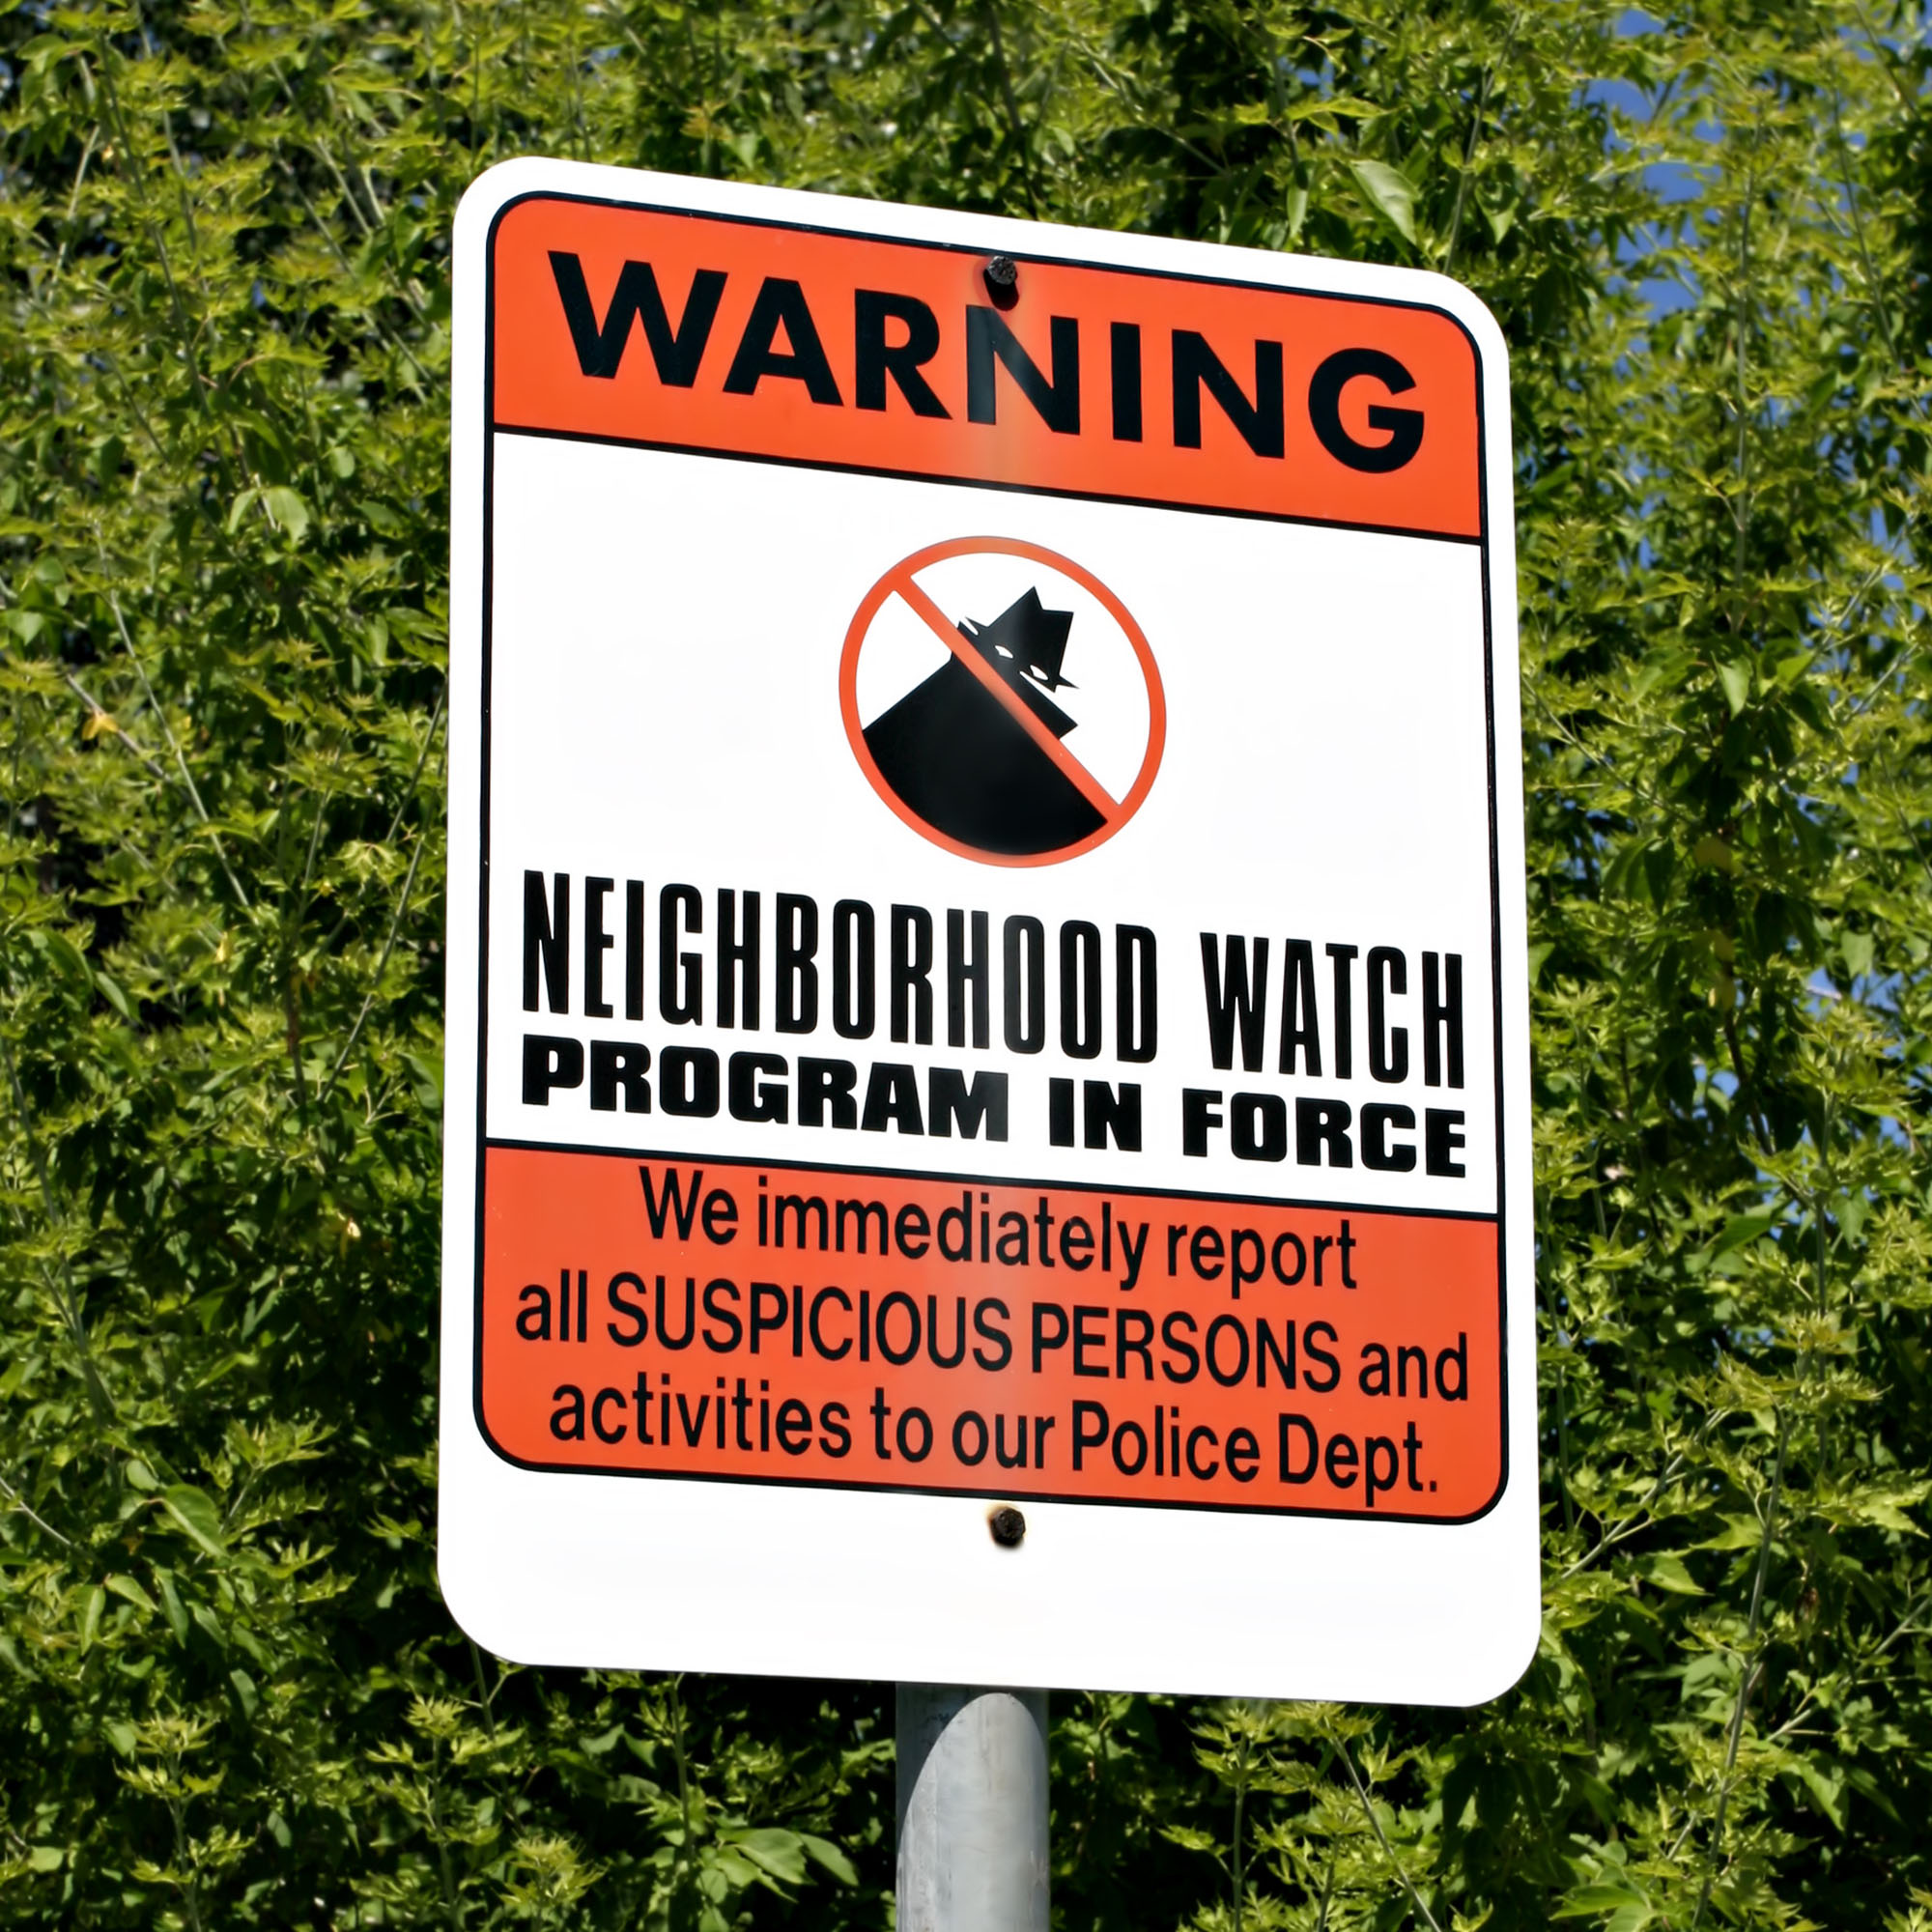 Neighborhood watch program in force